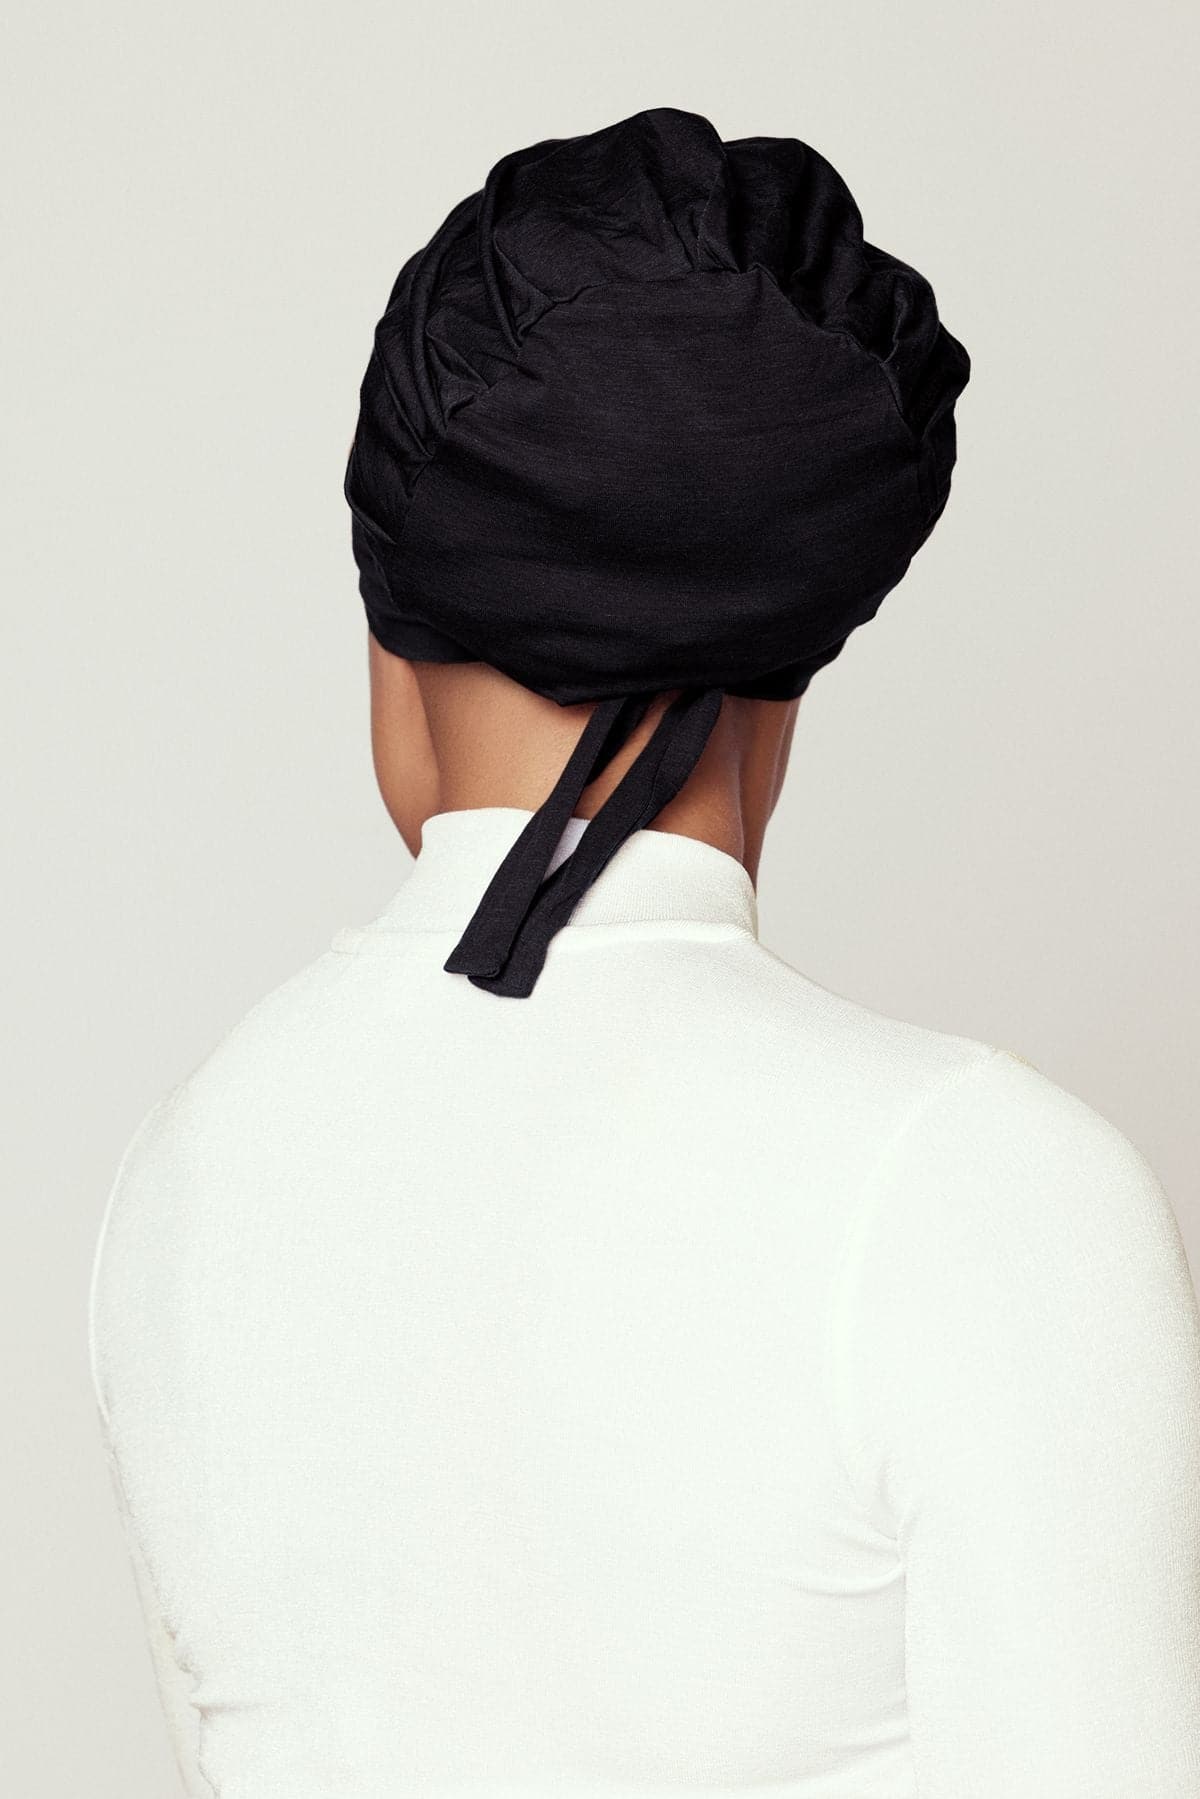 Noor Hijab Undercap- Black - Zahraa The Label